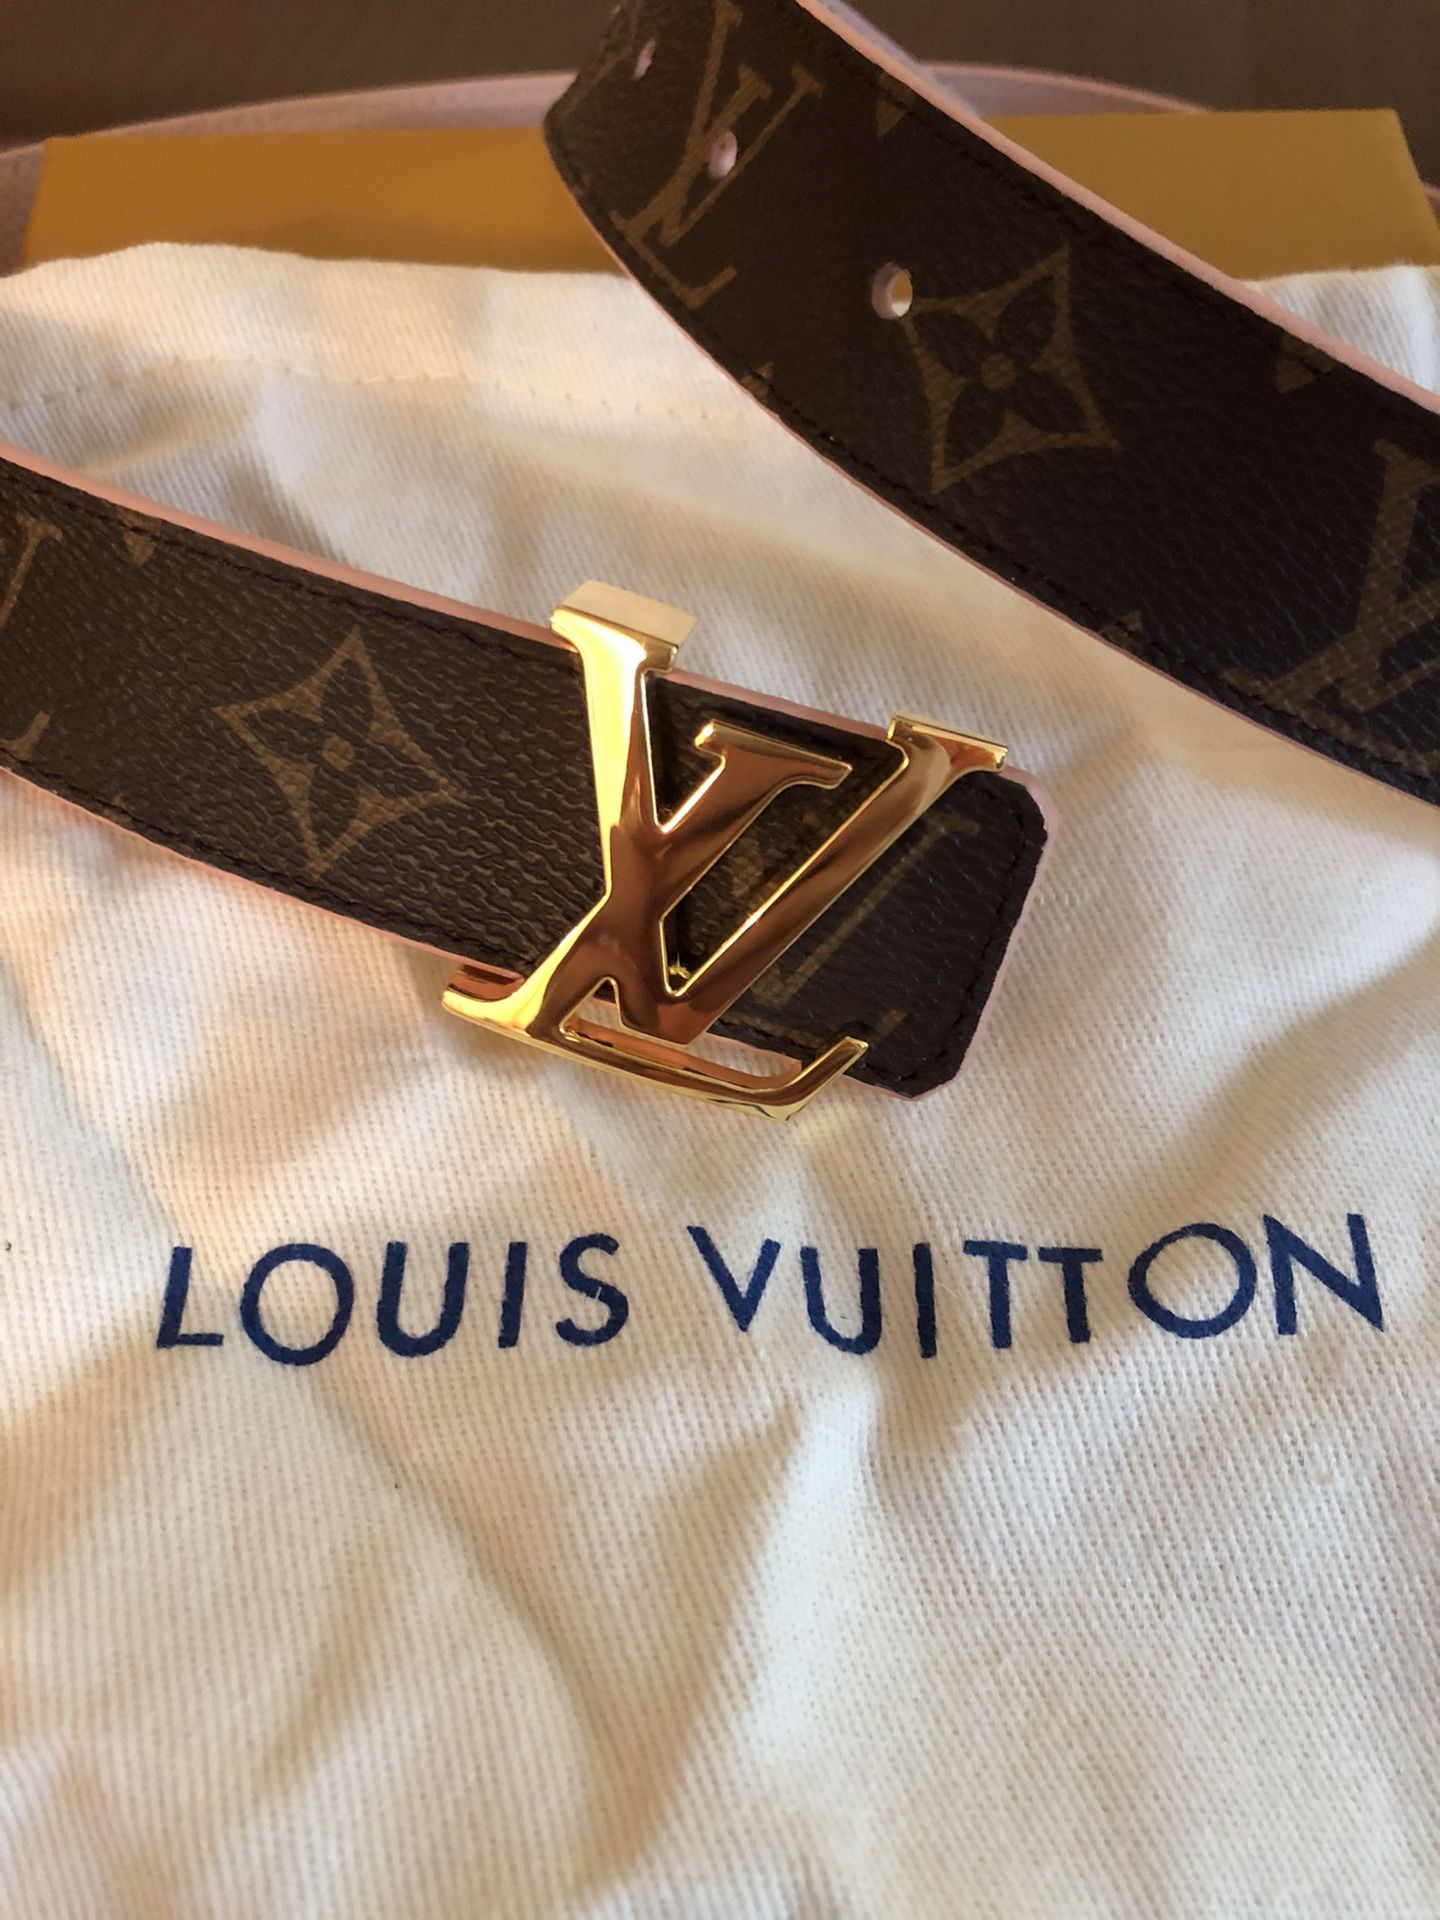 Louis Vuitton Belt Reversible Sizes 80-90 CM, 26-32 inch waist, Brown Monogram and Pink, 1 inch wide